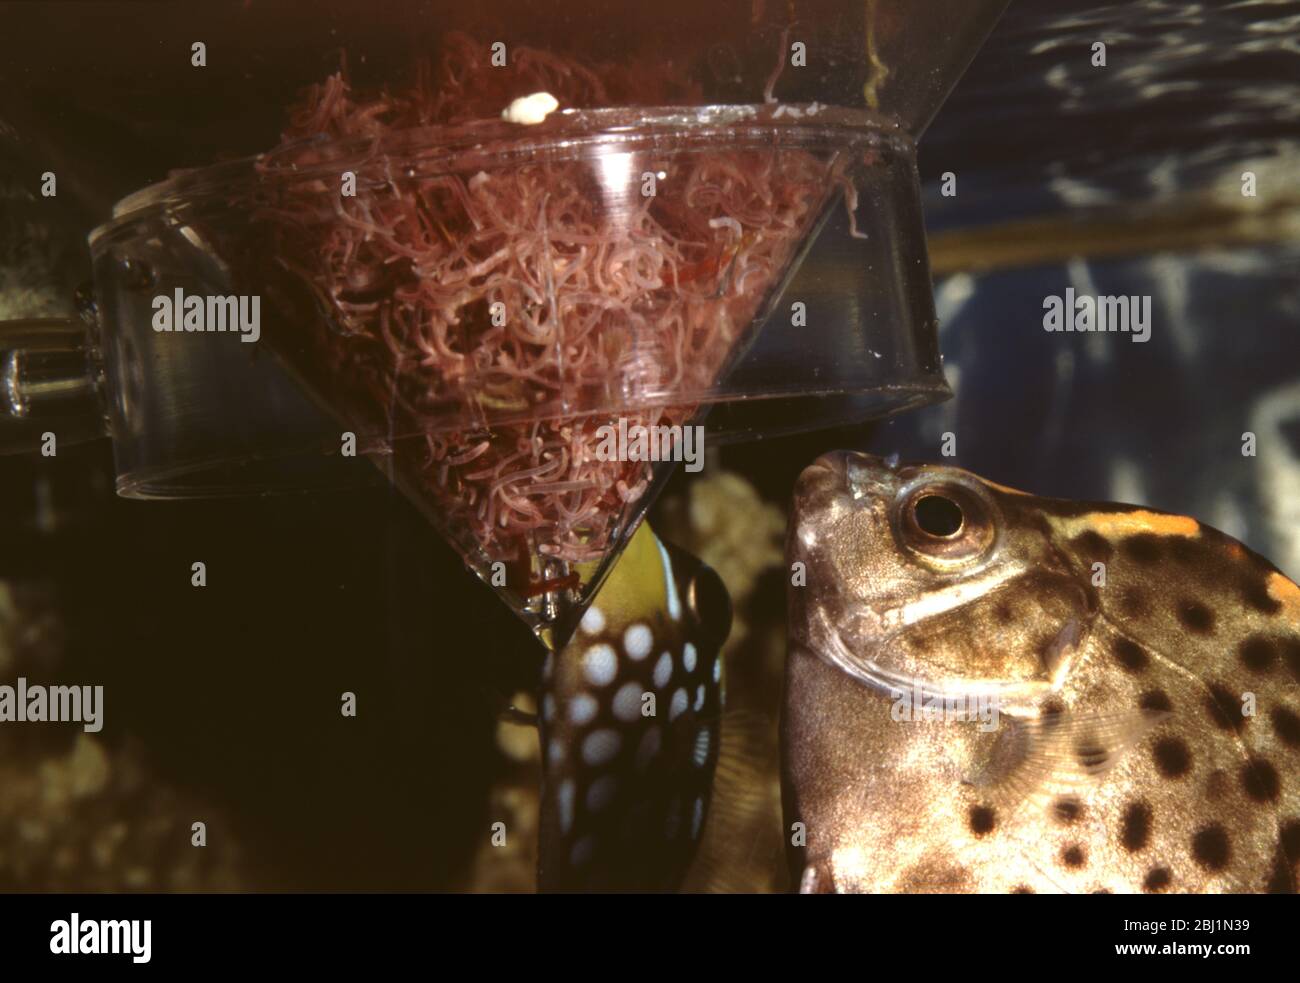 Aquarium live food: tubifex worms Stock Photo - Alamy